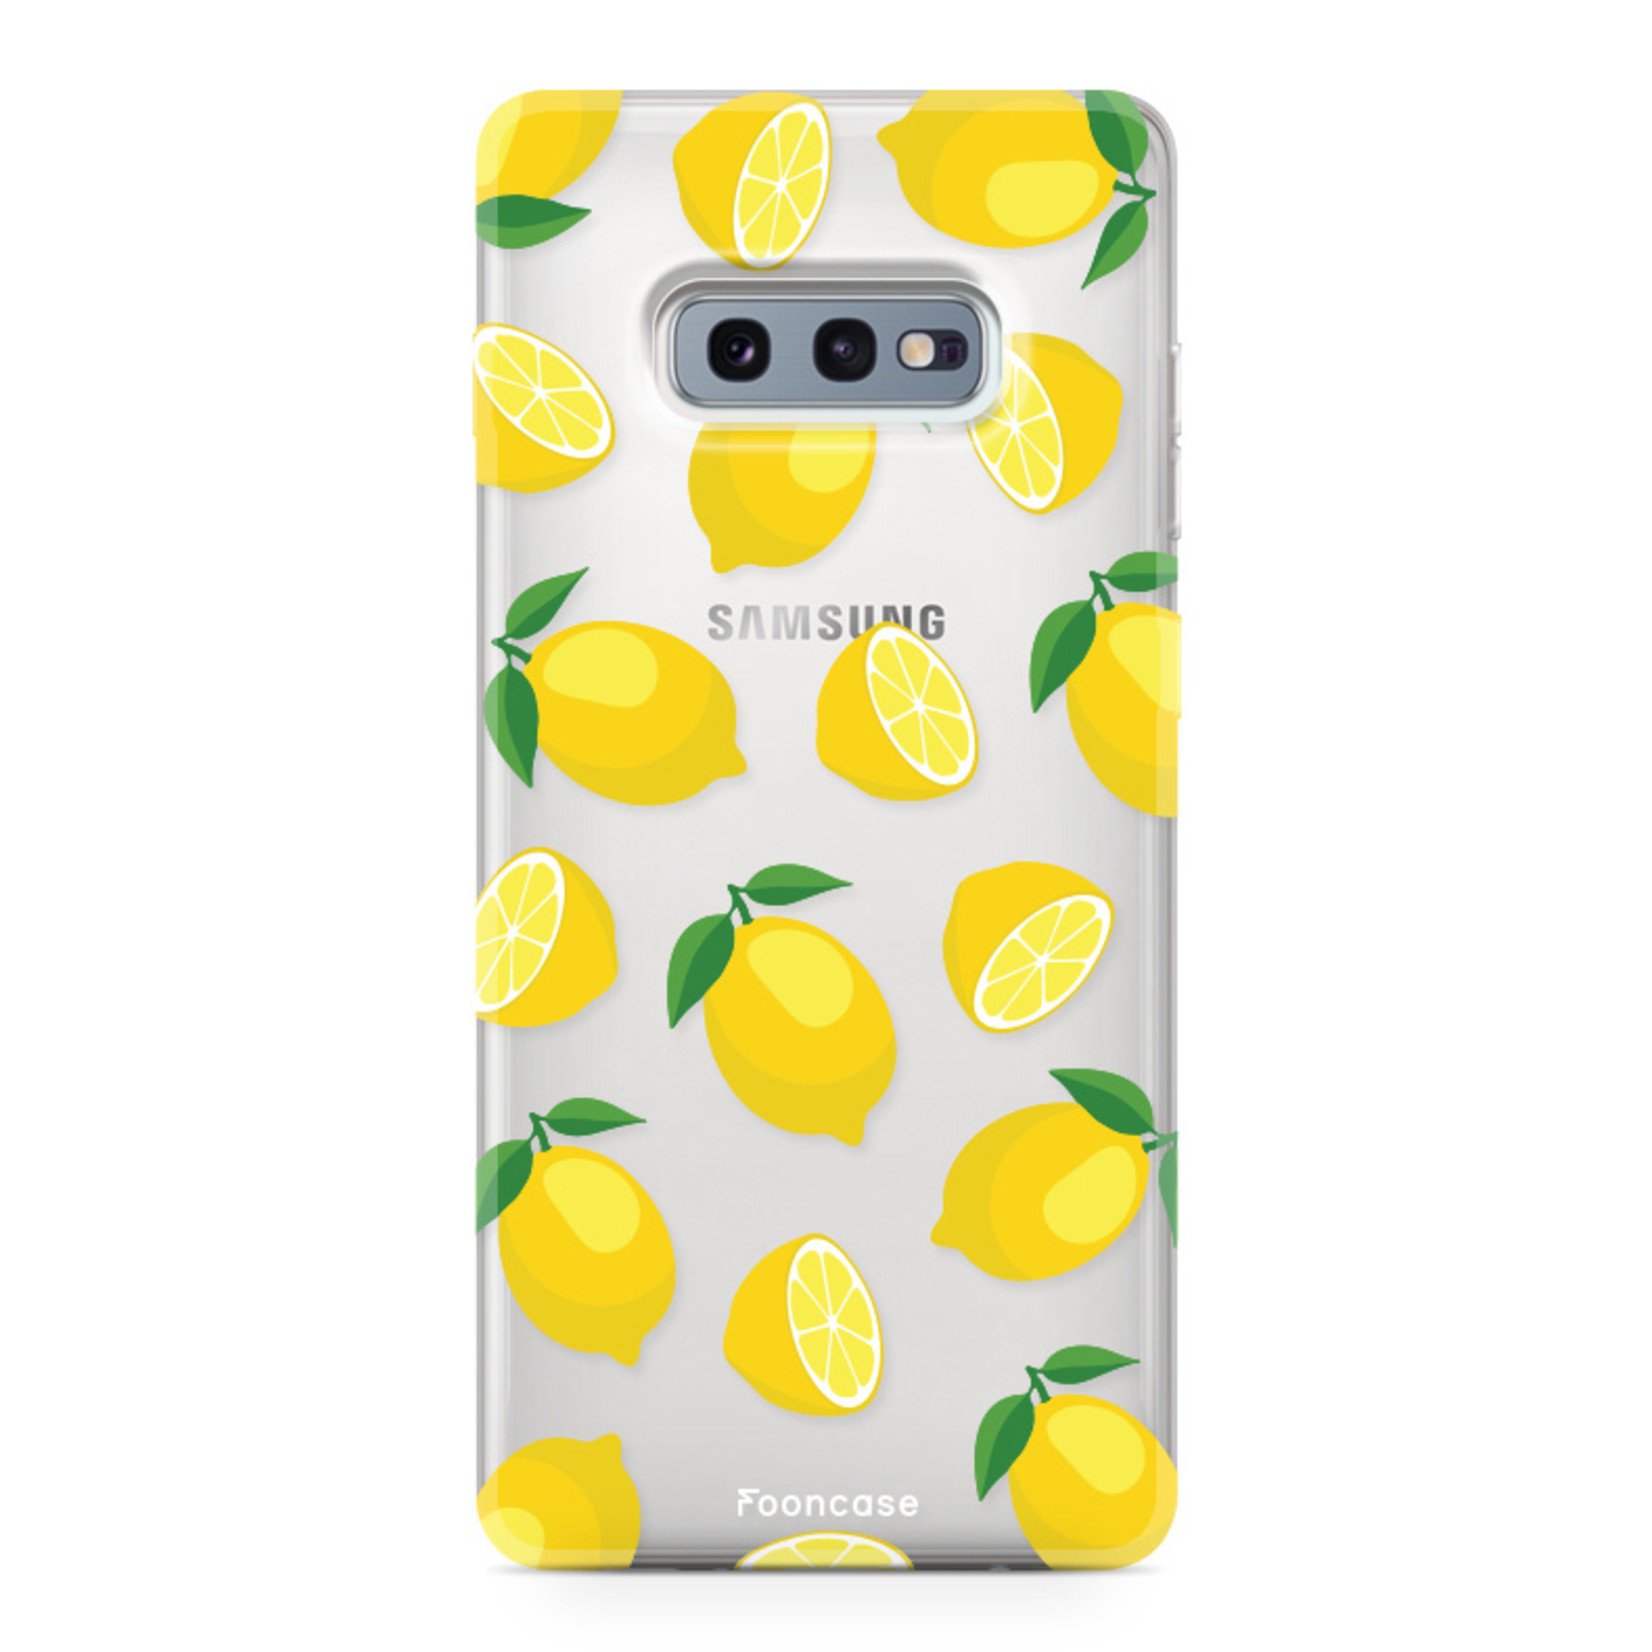 FOONCASE Samsung Galaxy S10e hoesje TPU Soft Case - Back Cover - Lemons / Citroen / Citroentjes